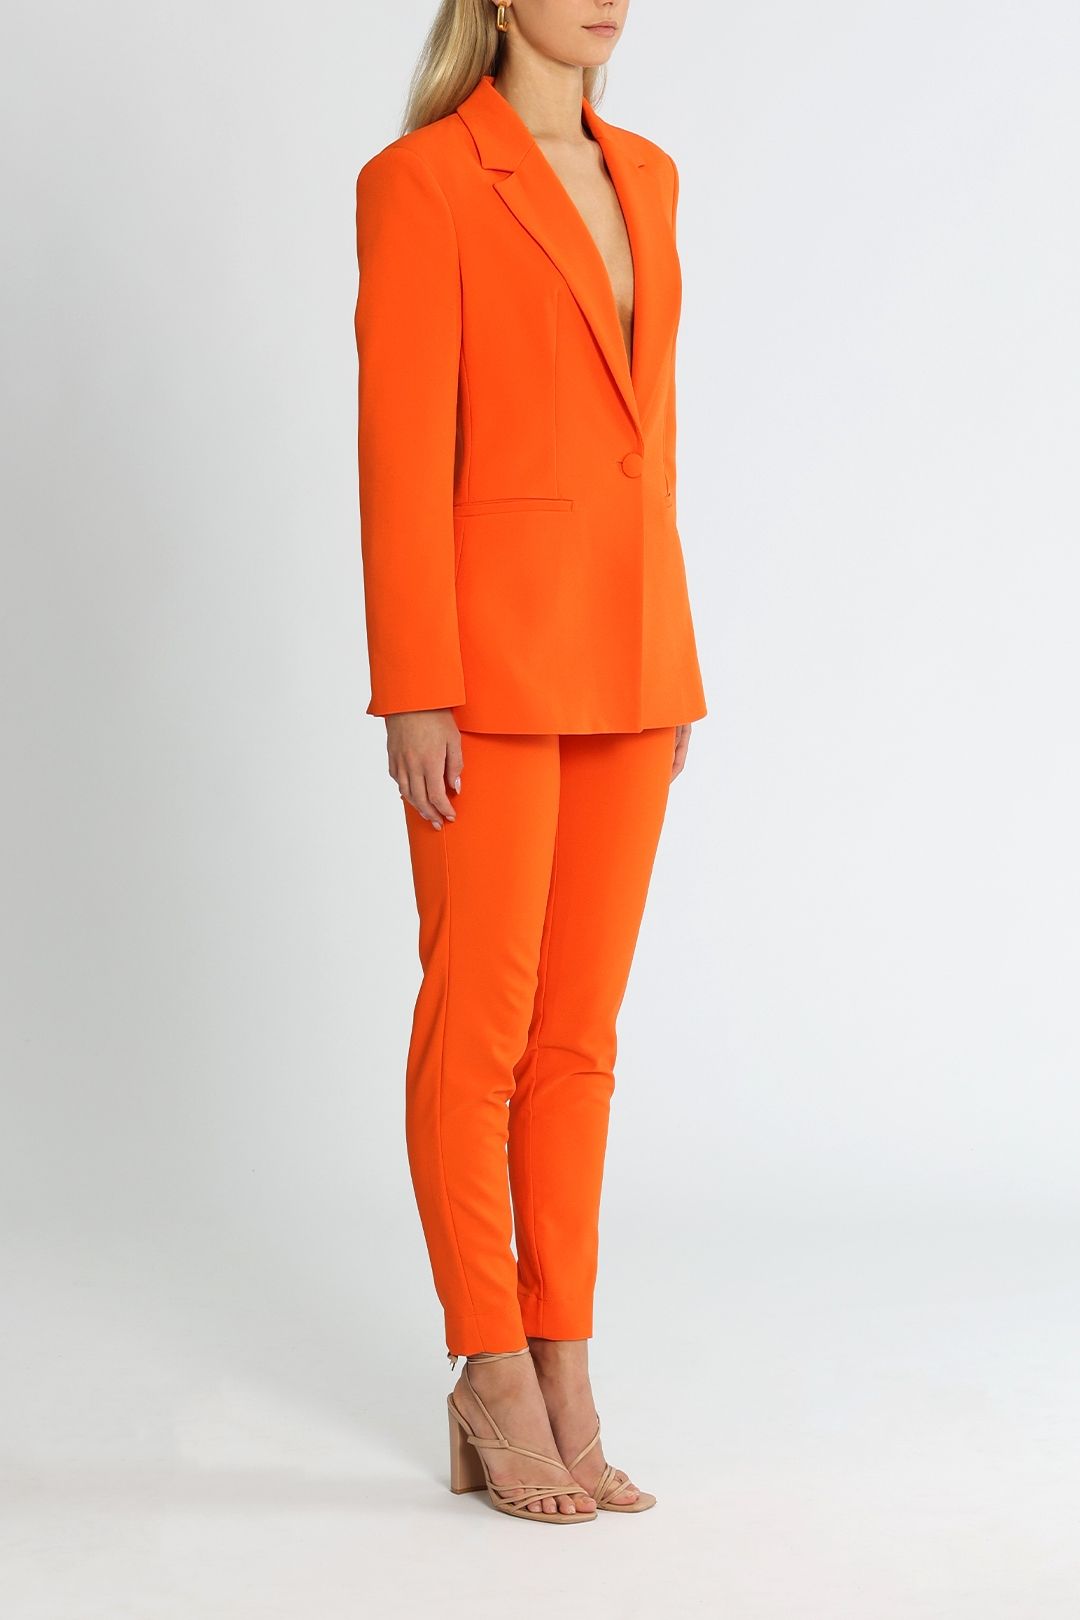 Setre Jasmine Suit Jacket and Pant Tangerine Orange